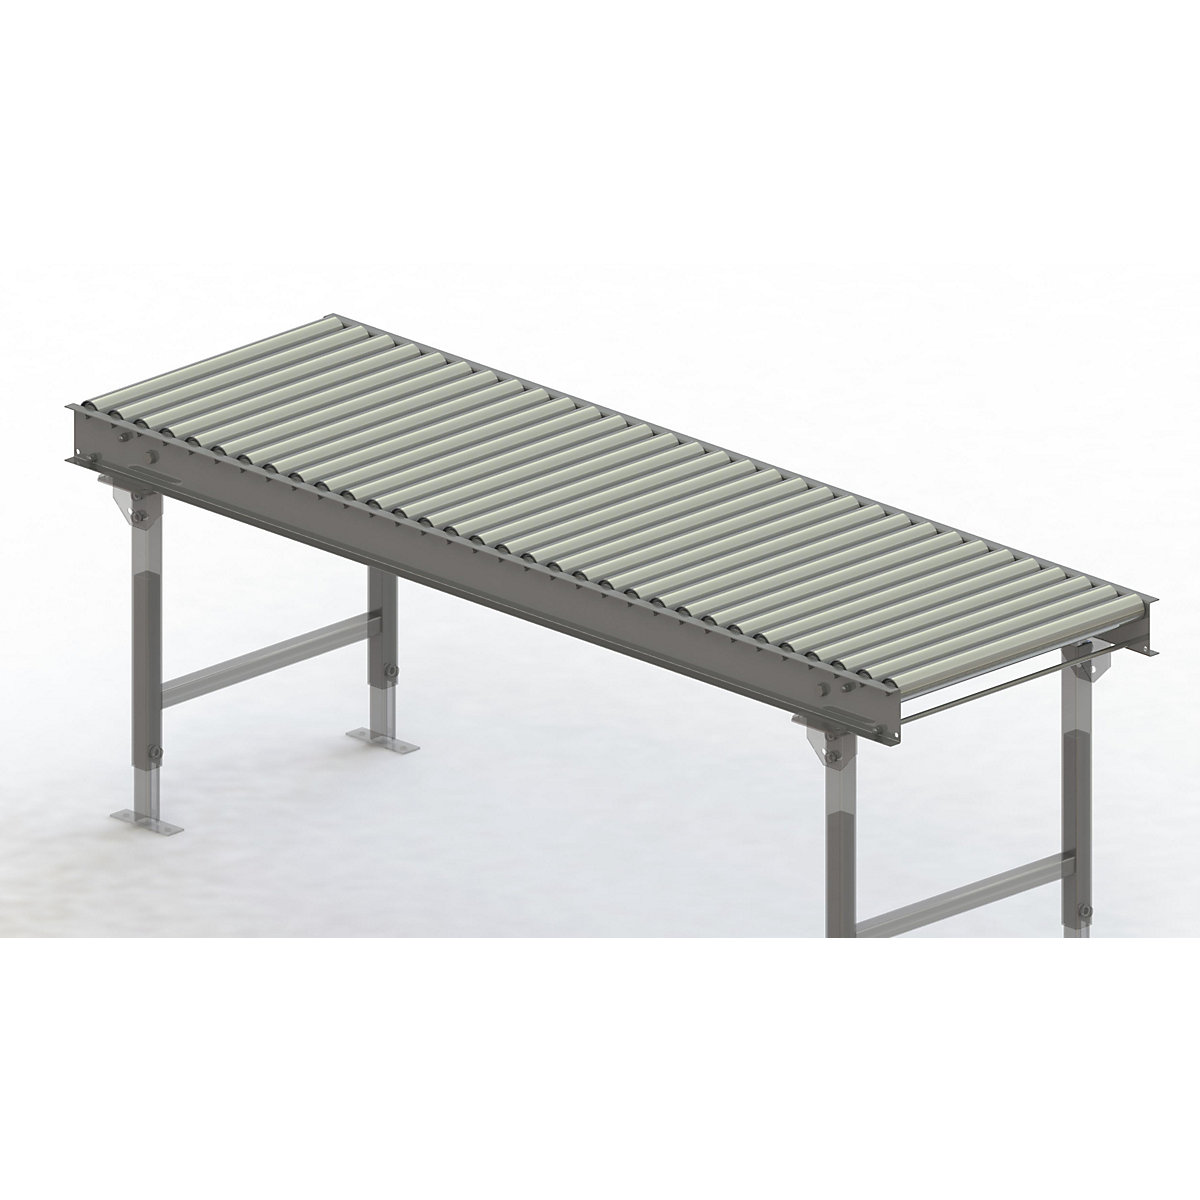 Gura – Roller conveyor, steel frame with zinc plated steel rollers, track width 600 mm, distance between axles 62.5 mm, length 2 m